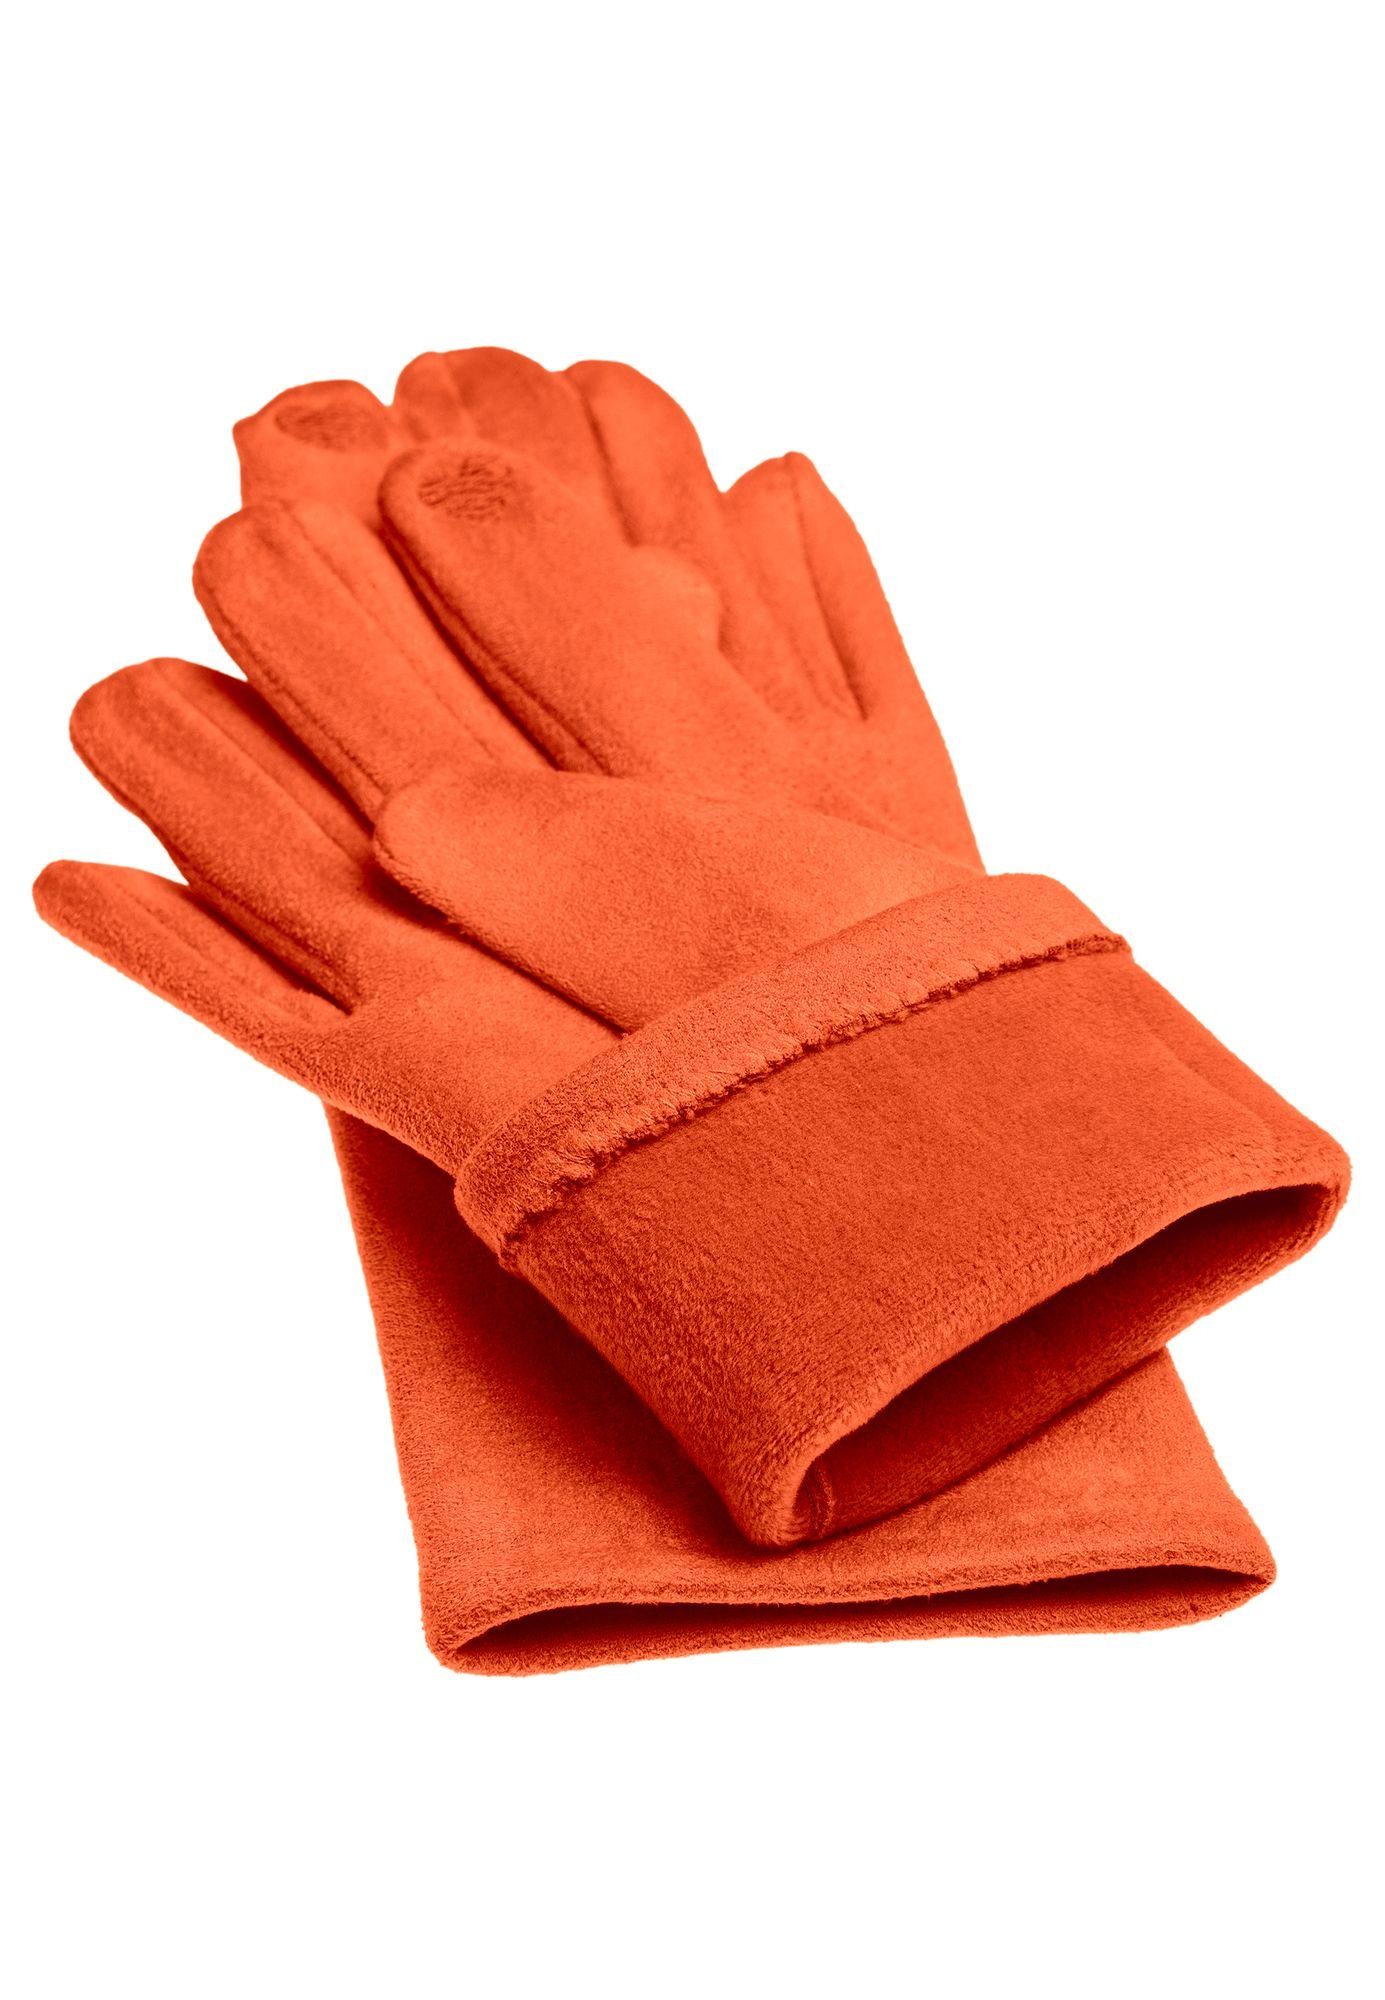 Caspar Strickhandschuhe GLV013 klassisch Winter (orange) Handschuhe uni elegante Damen rost